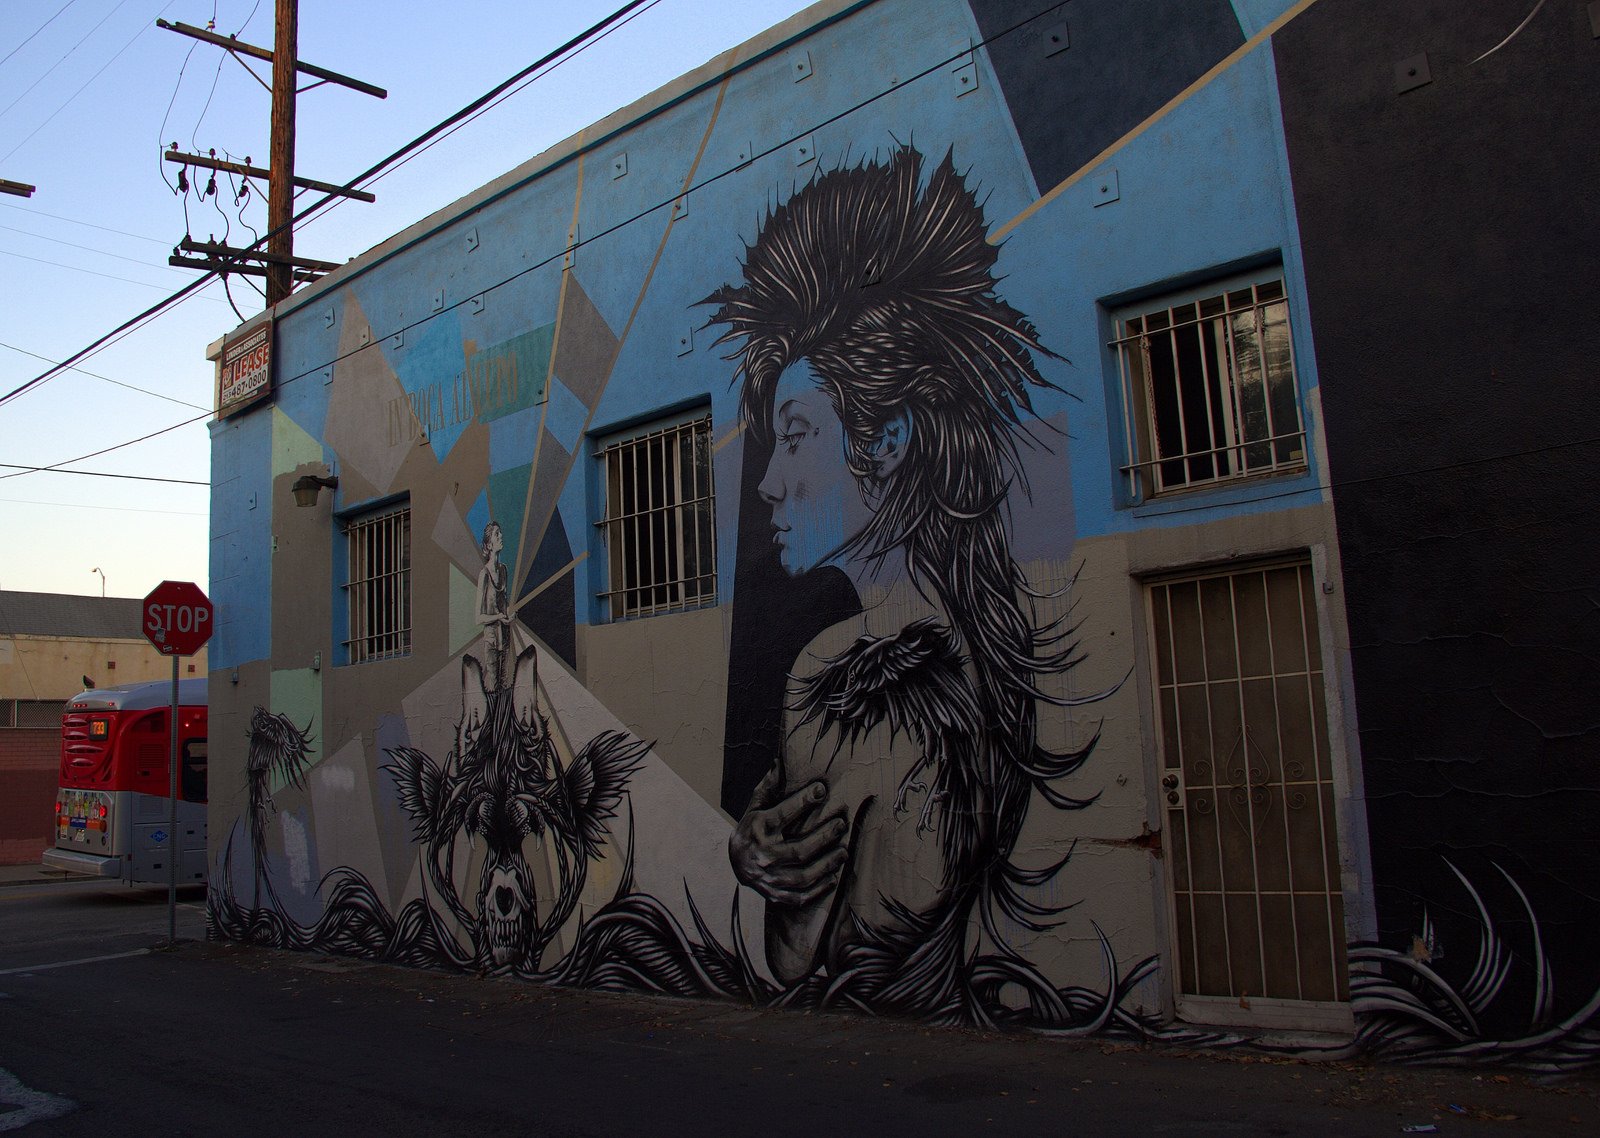 angeles, Art, Buildings, California, Cities, City, Colors, Graff, Graffiti, Illegal, Los, Pacific, Street, Wall Wallpaper